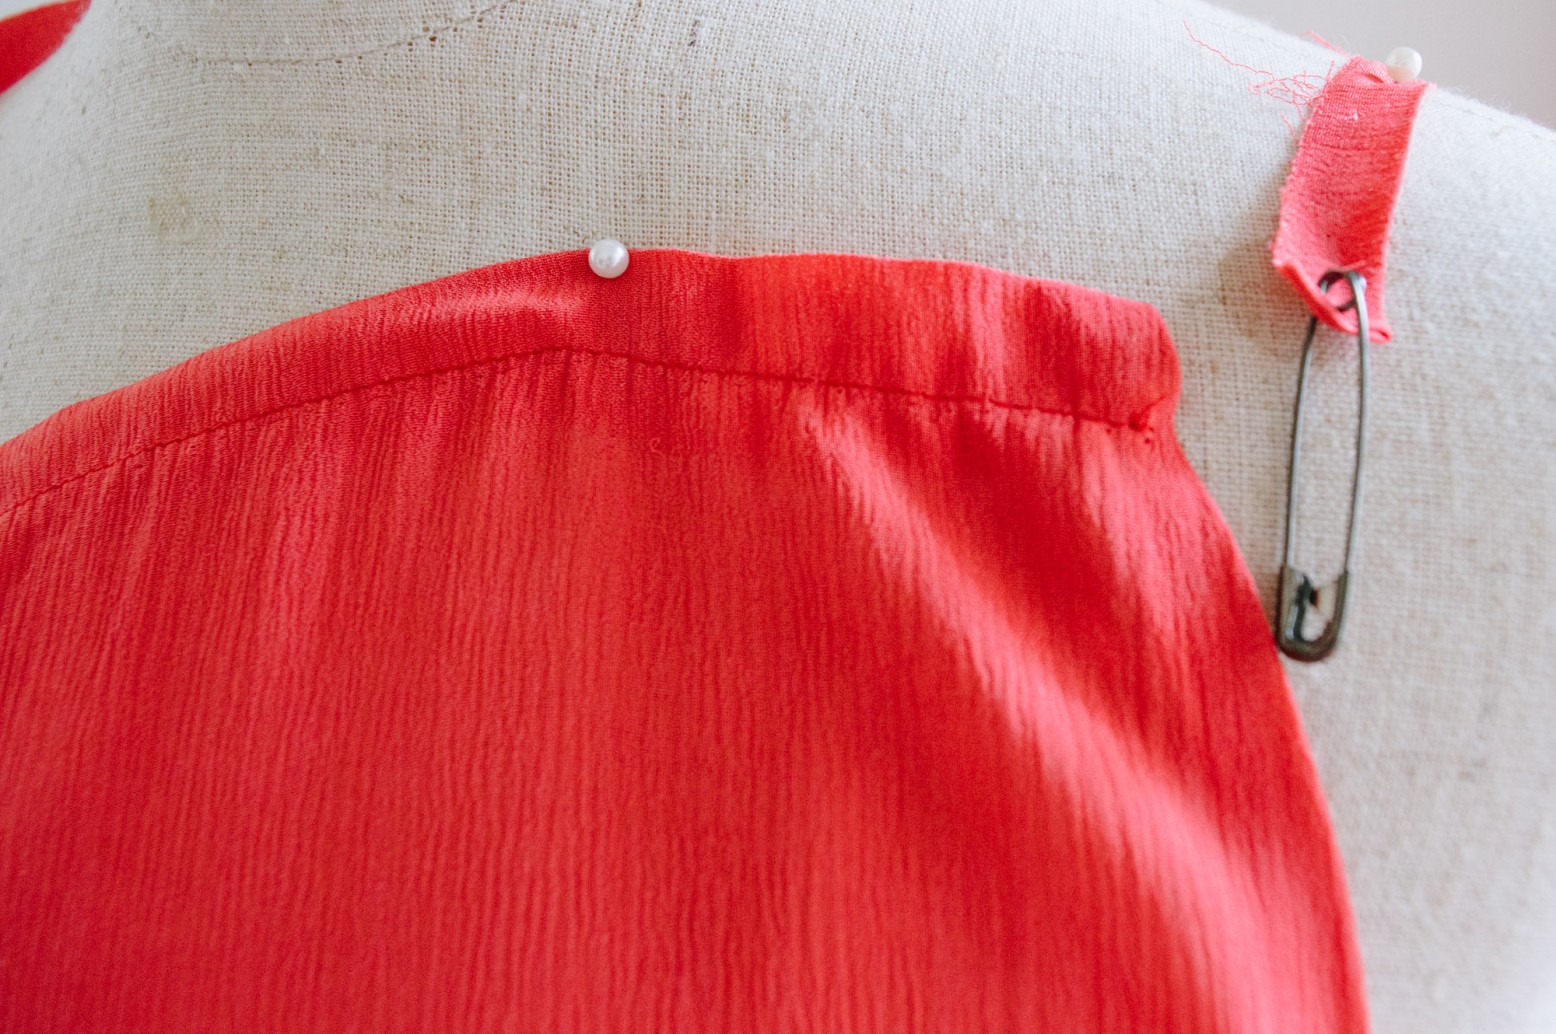 DIY:Vibrant Backless Maxi Dress With Slit : 8 Steps - Instructables